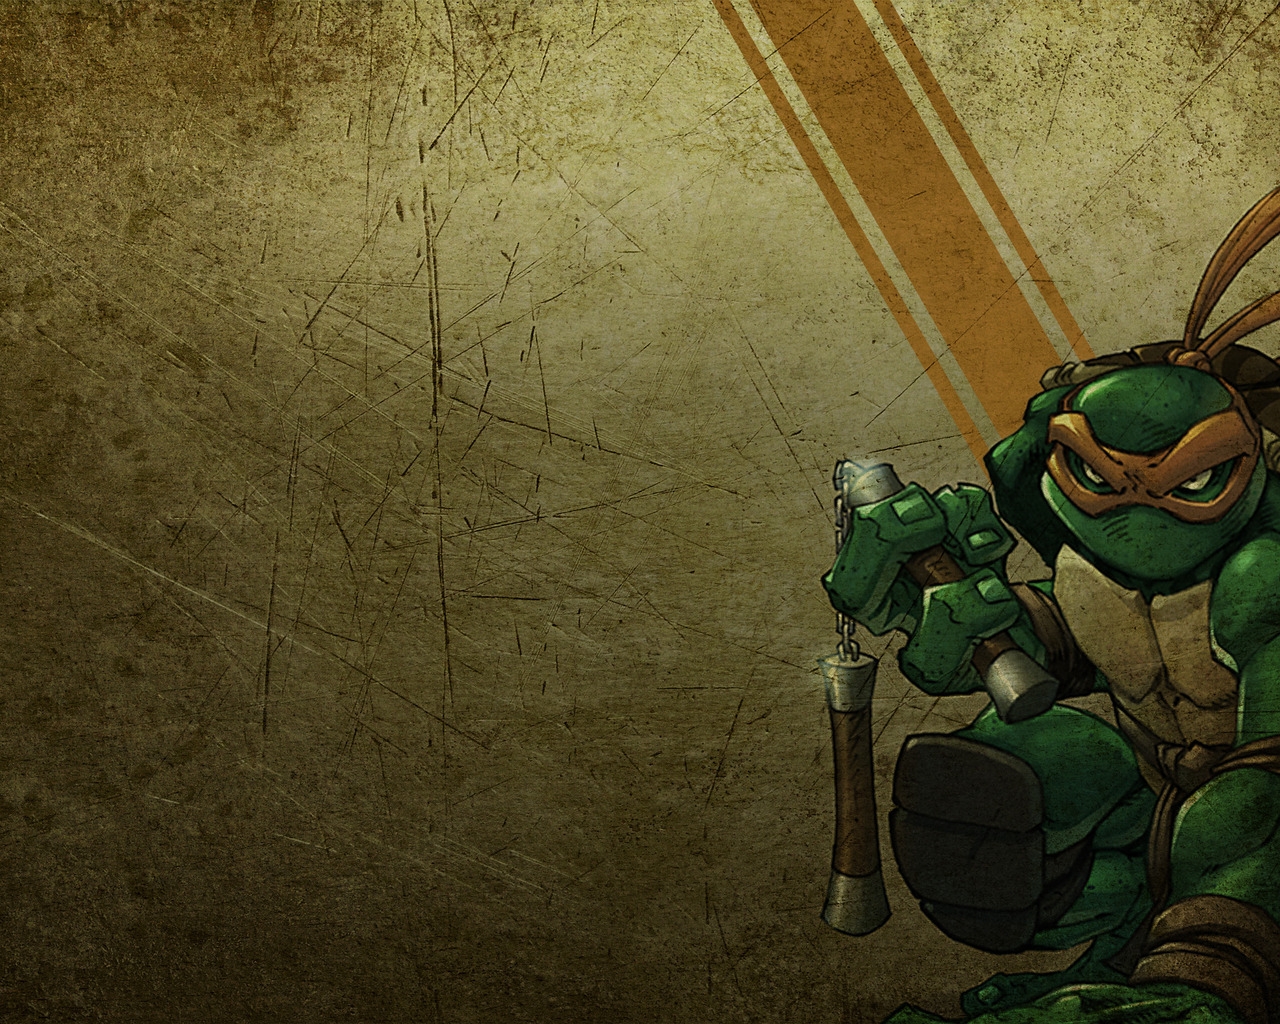 Mutant Ninja Turtles for 1280 x 1024 resolution